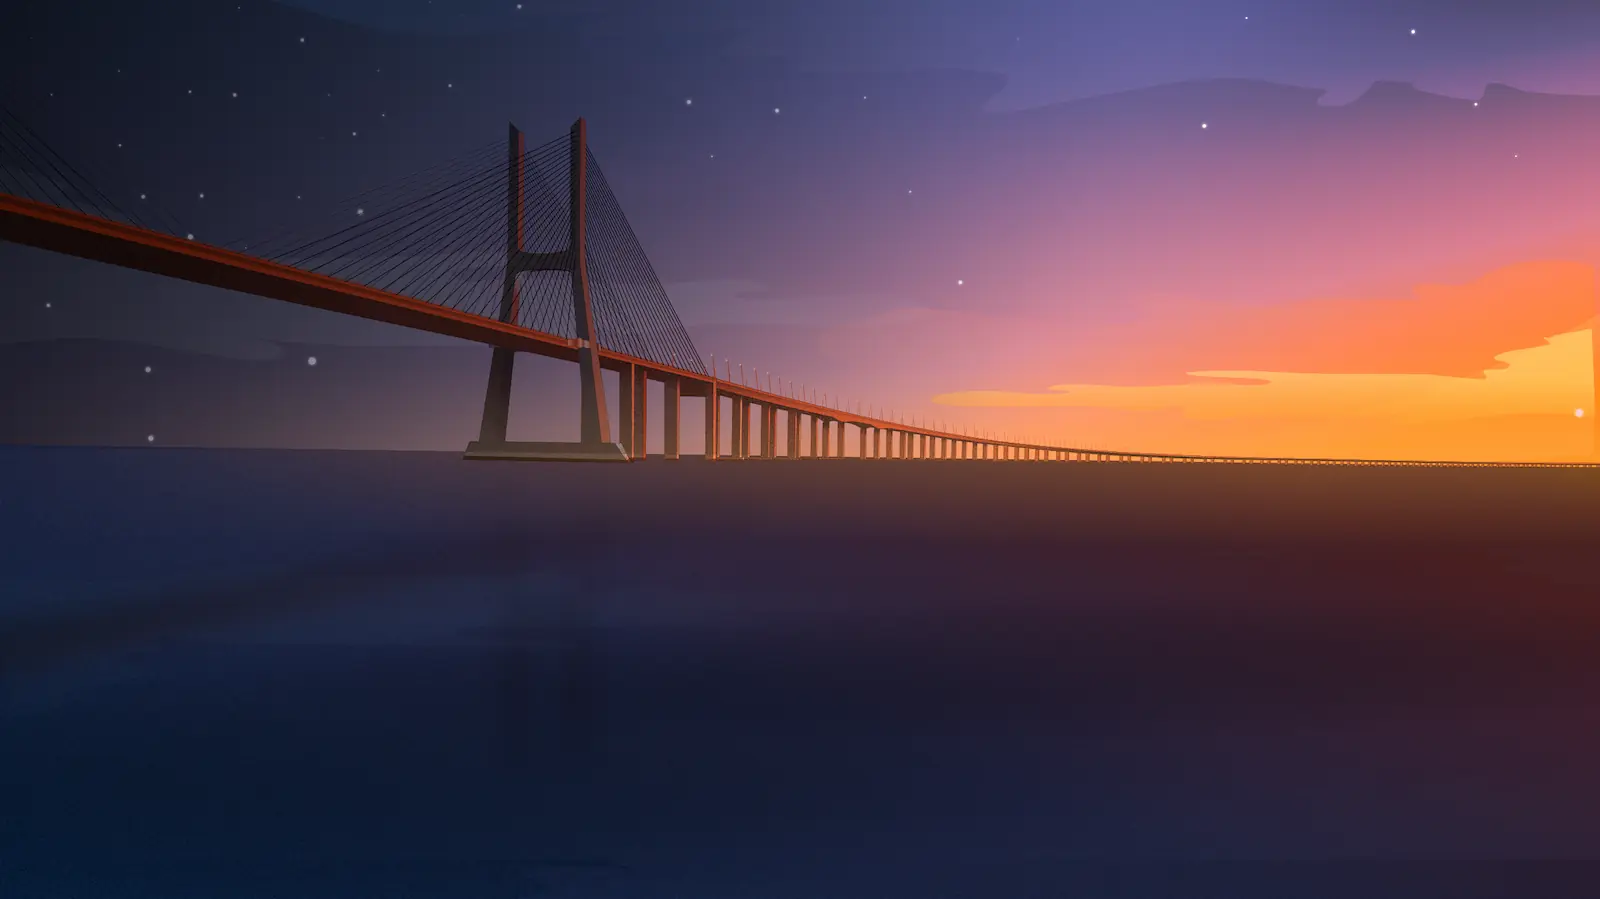 Bridge at sunset over the ocean.